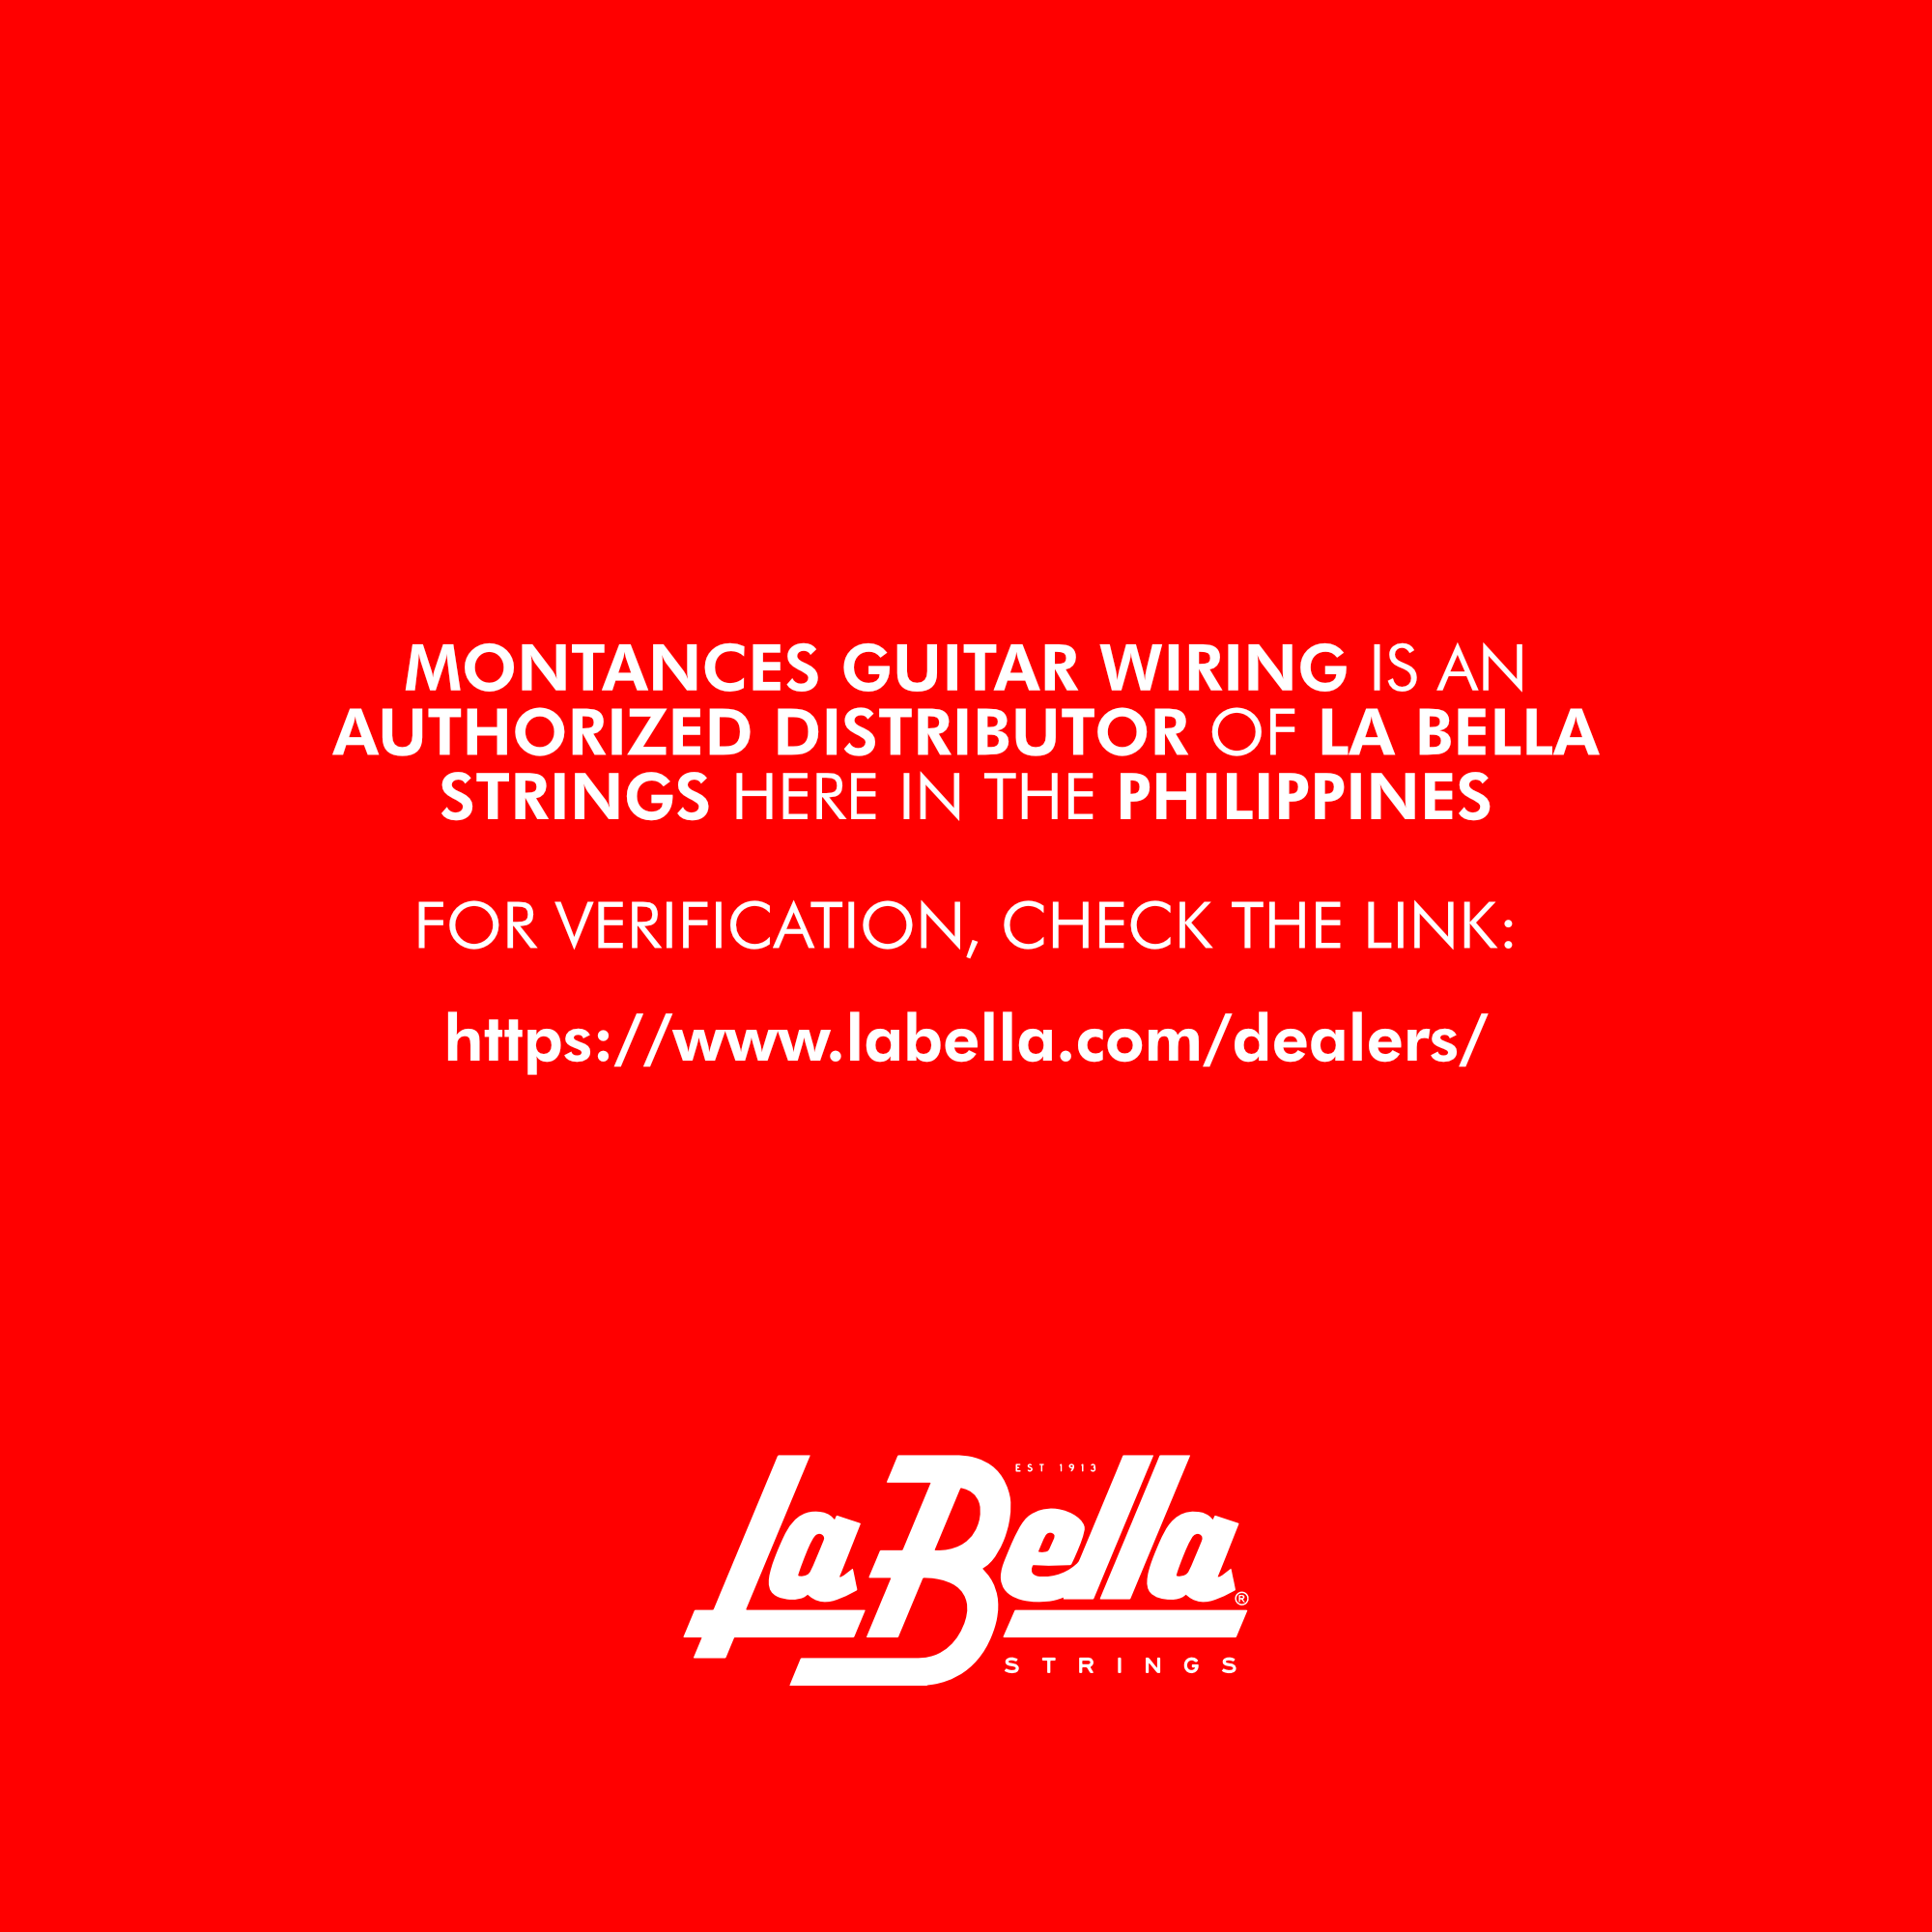 La Bella RX-N5D Rx Nickel, 45-65-85-105-130 - Bass Guitar Strings